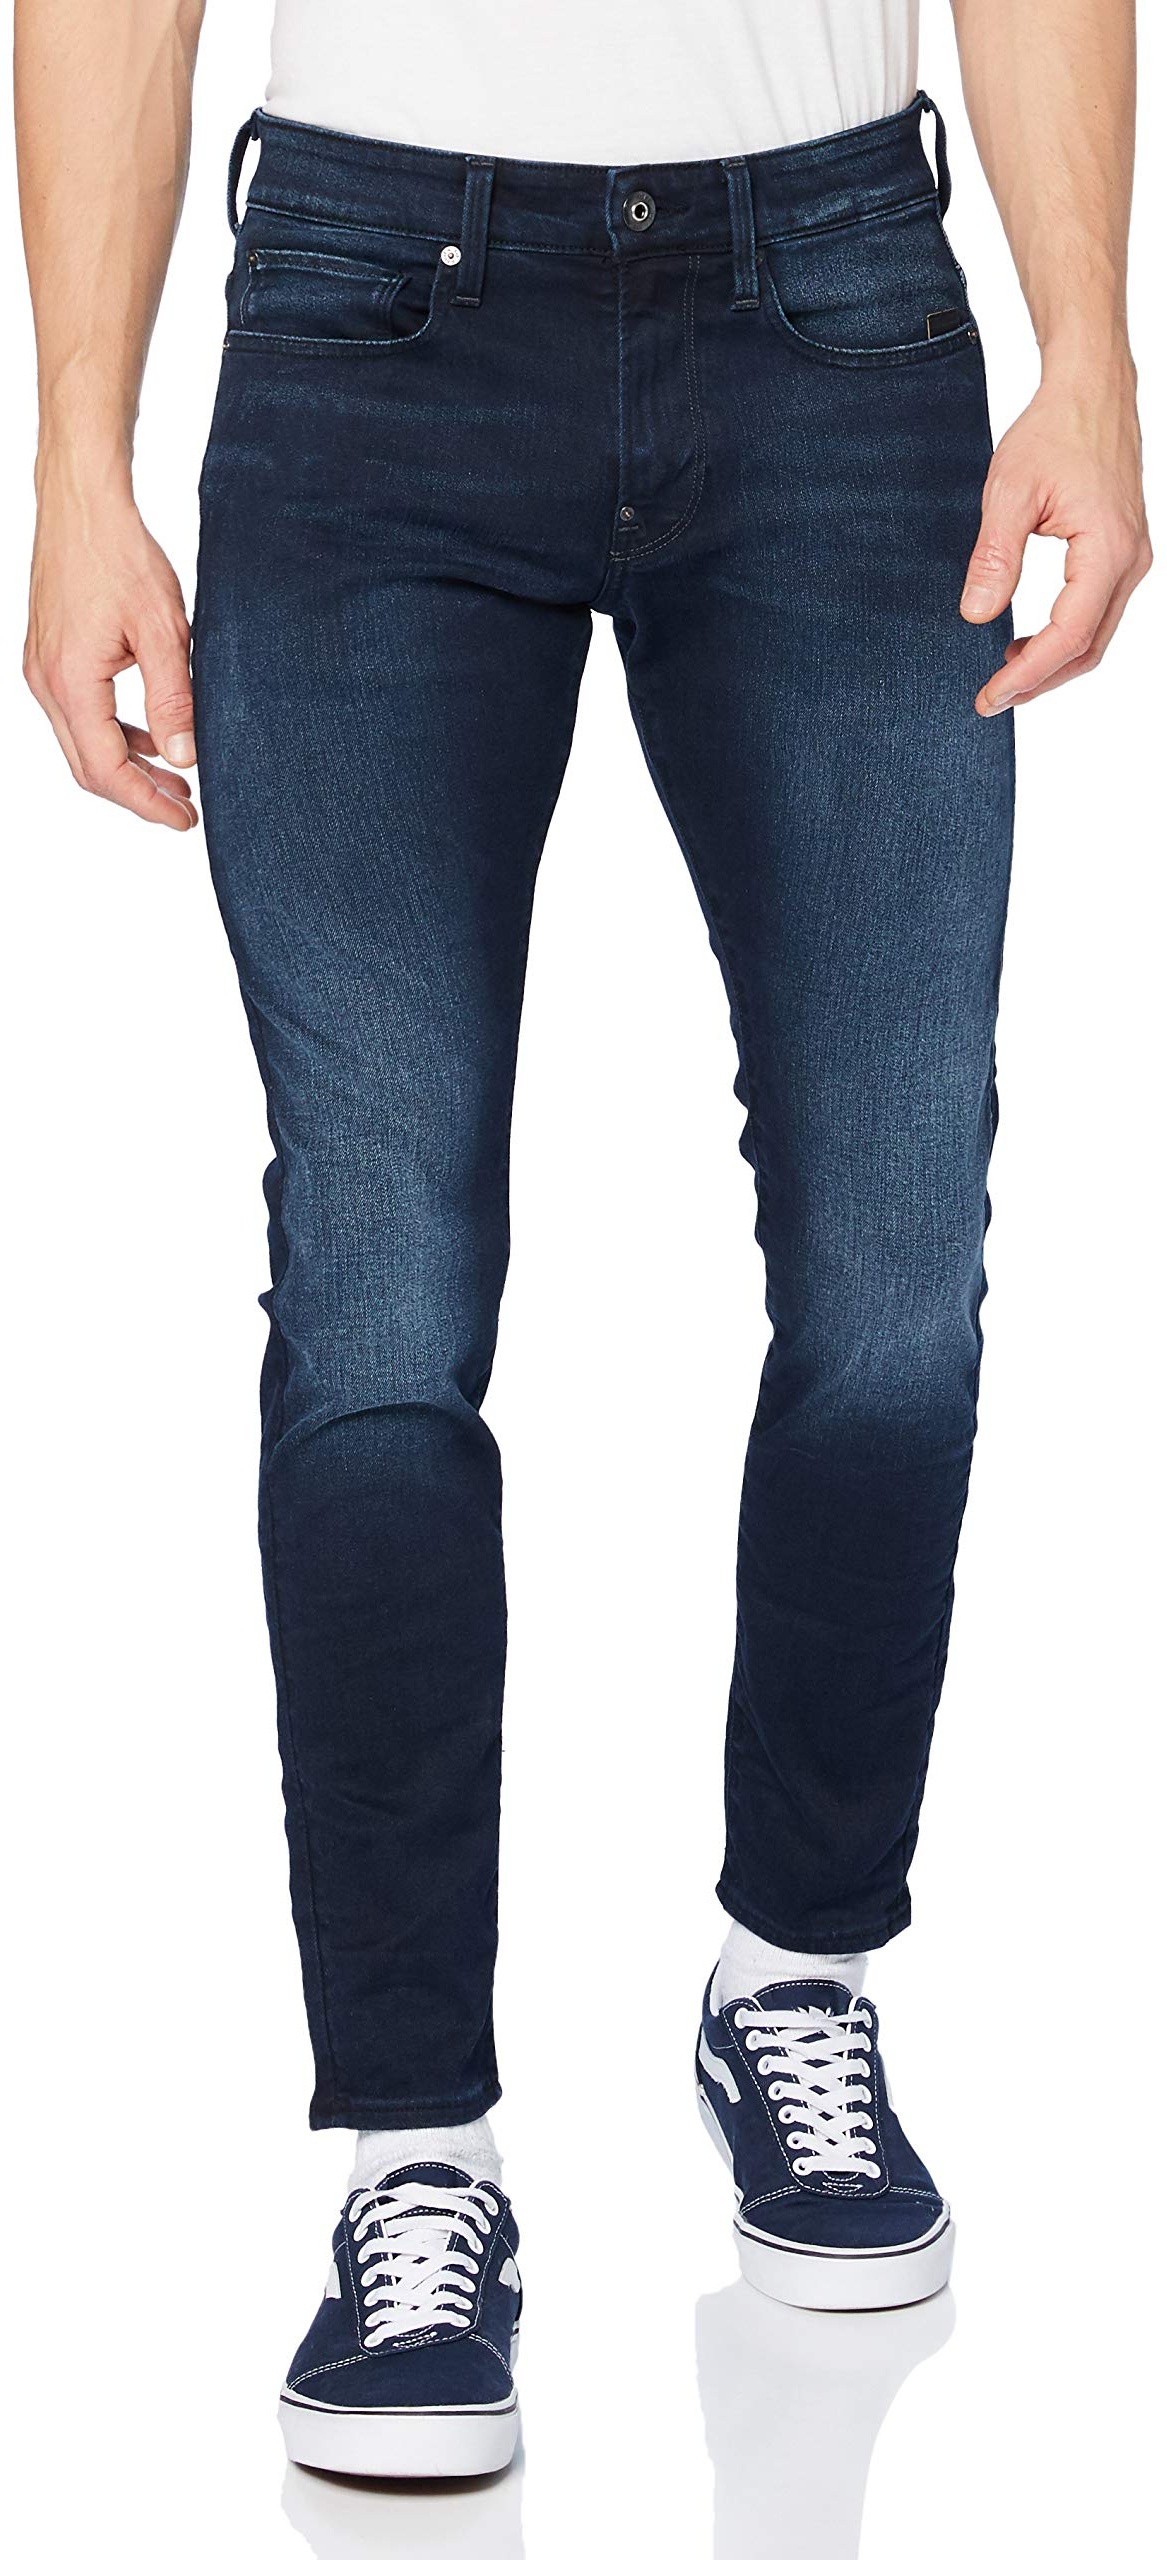 G-STAR RAW Herren Revend Skinny Jeans, Blau (dk aged 51010-6590-89), 40W / 38L